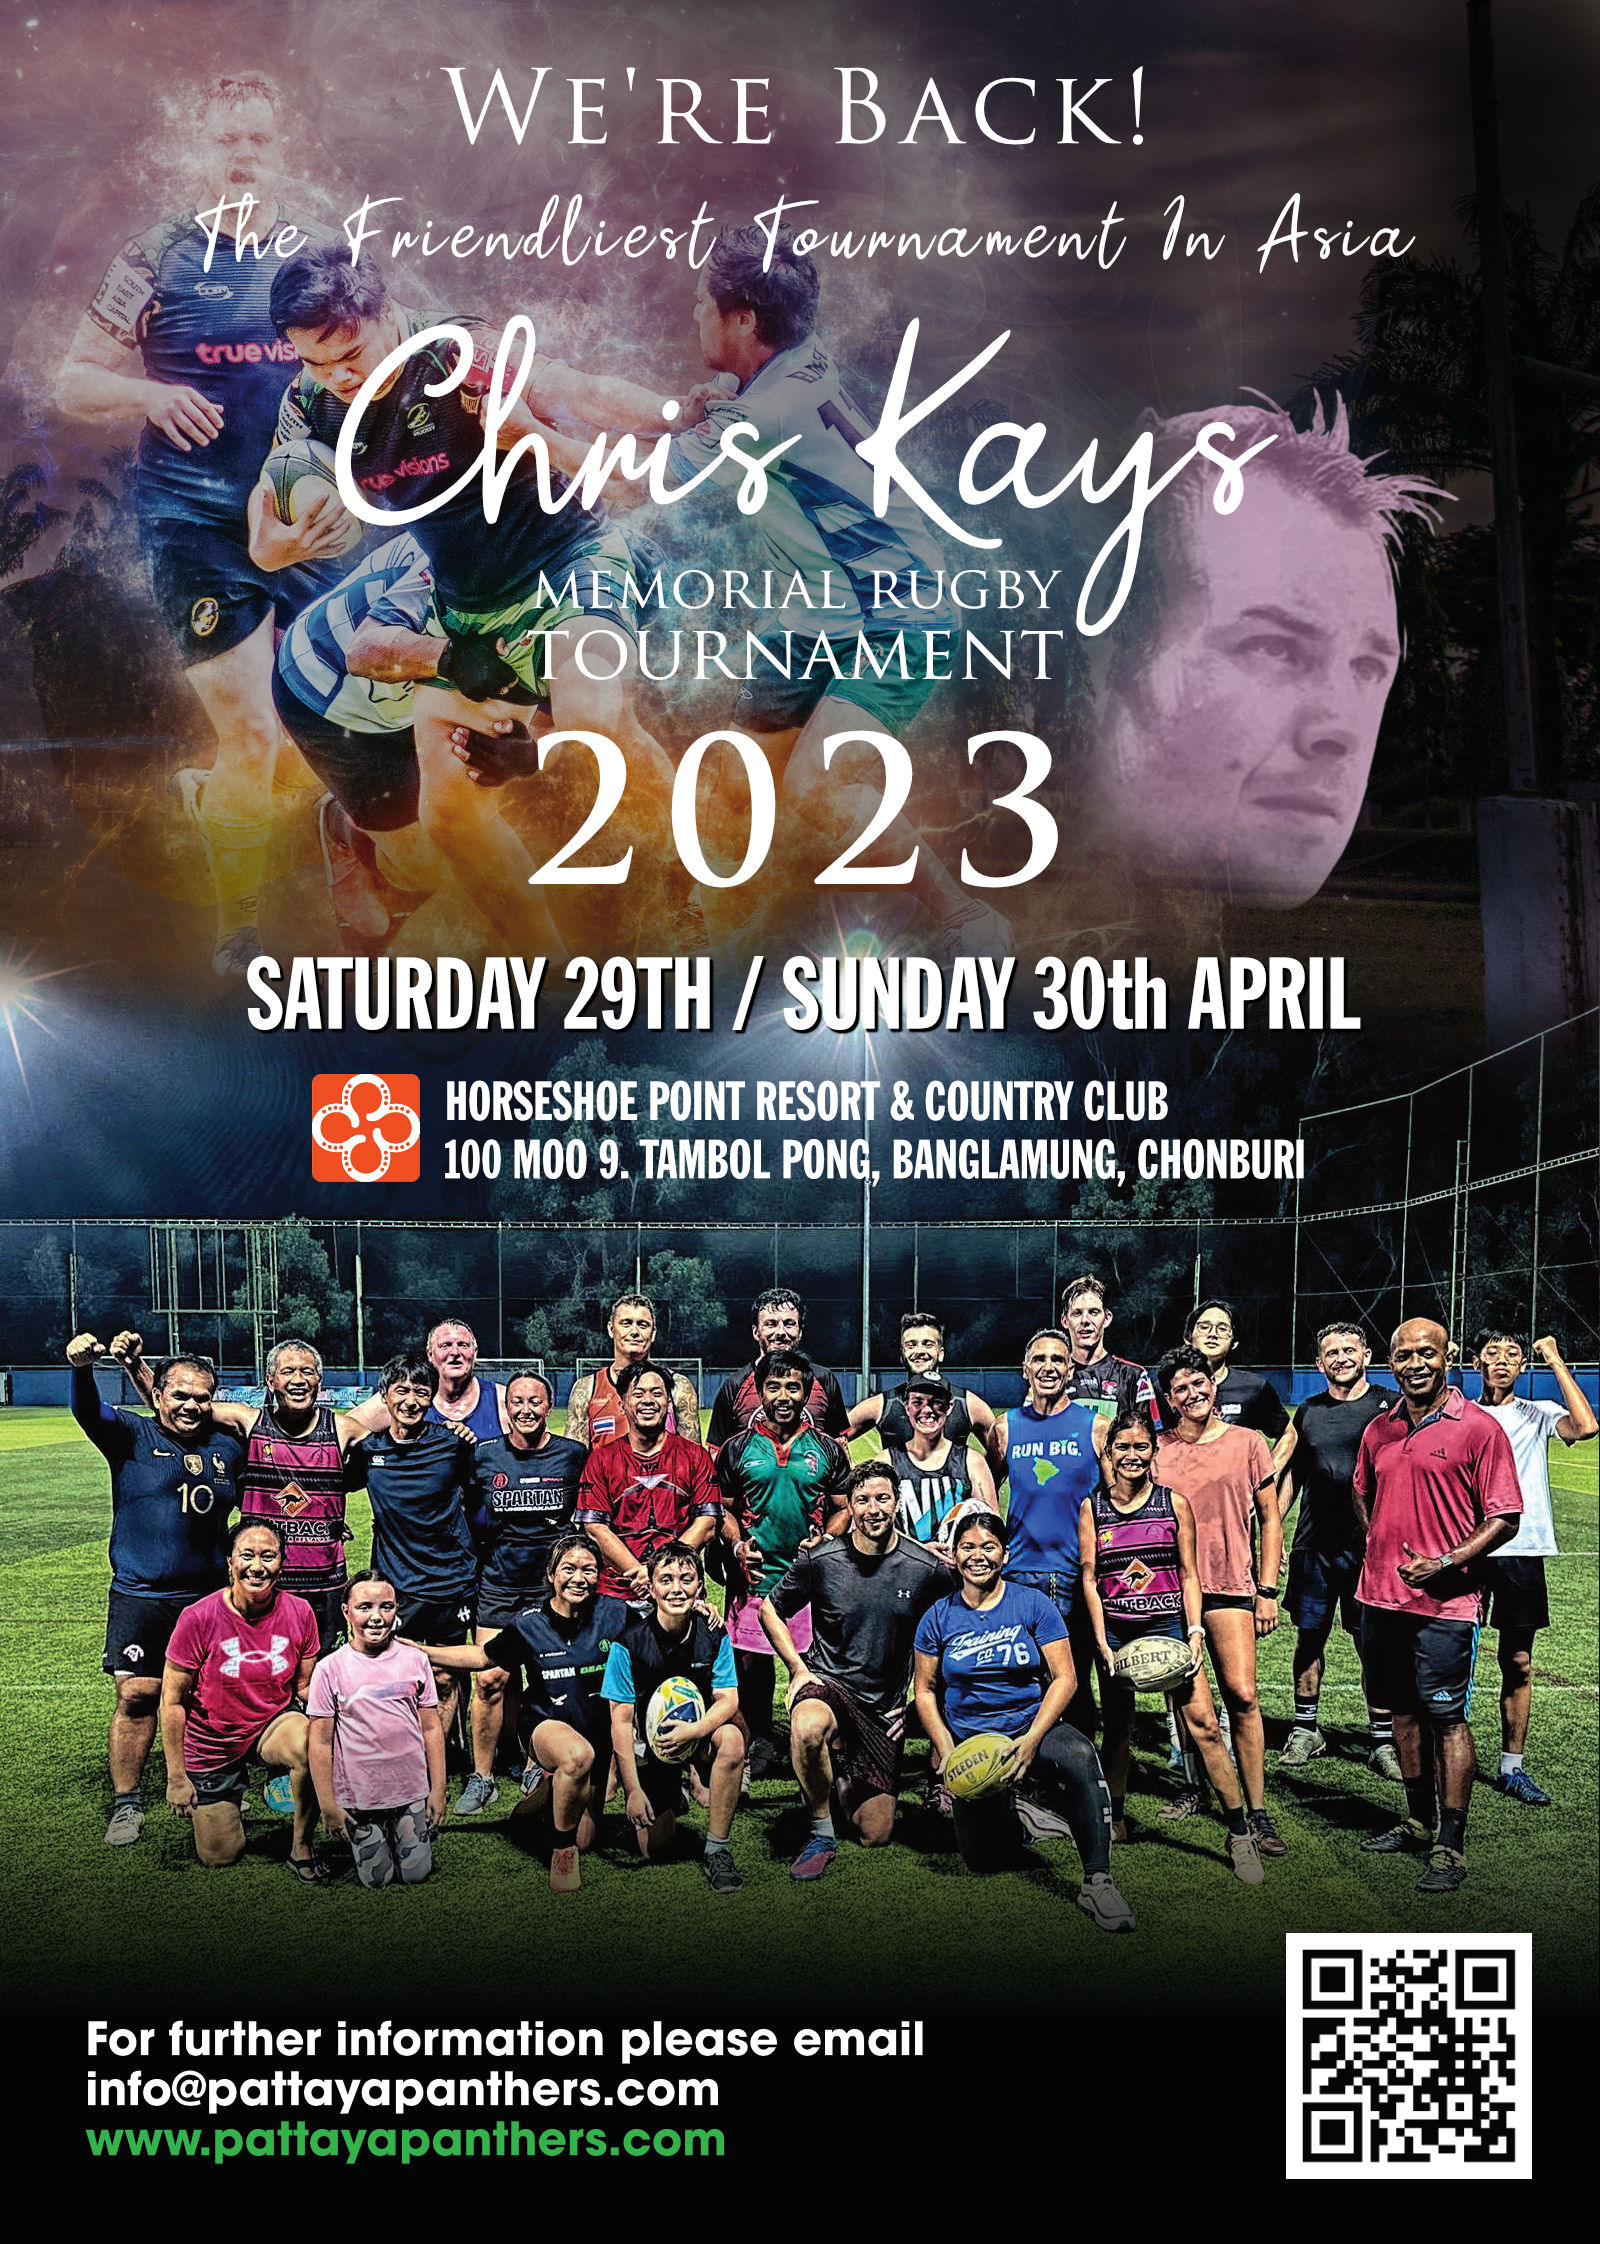 Chris Kays Memorial Rugby Tournament 2022